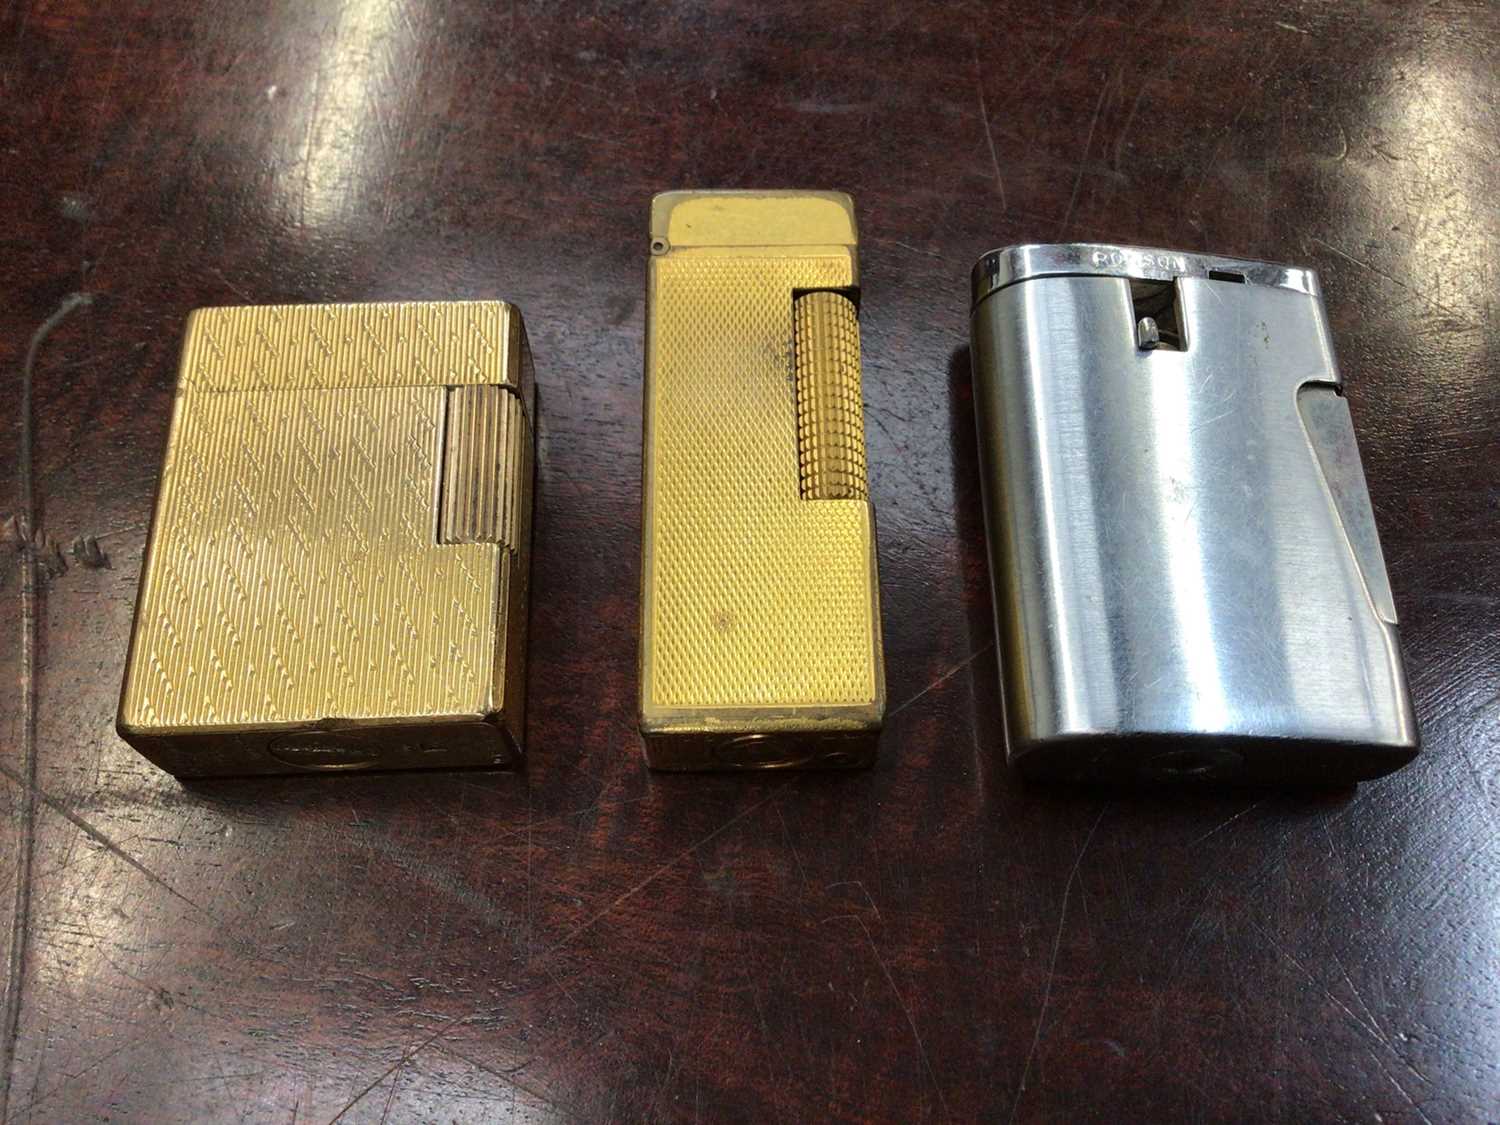 vintage ronson lighters